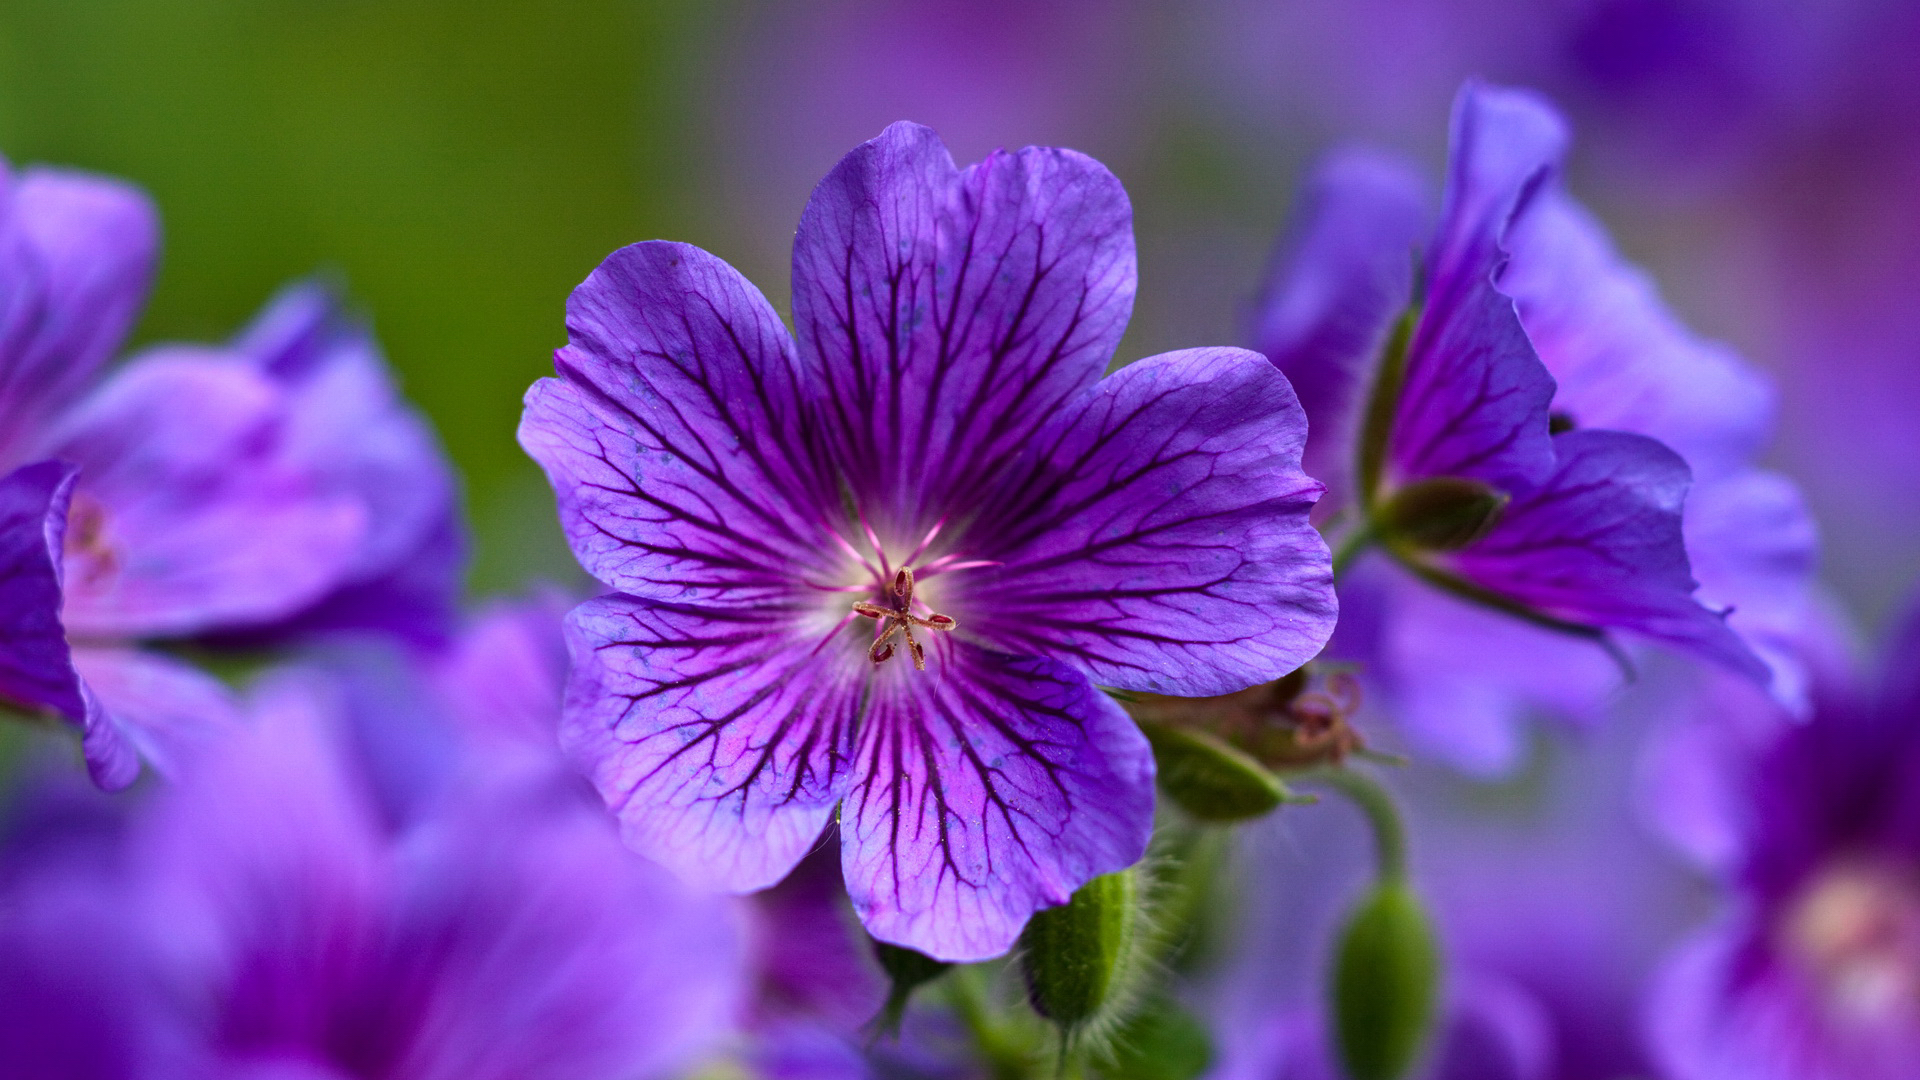 Phone wallpaper: Plants, Flowers, Violet free download #40293.